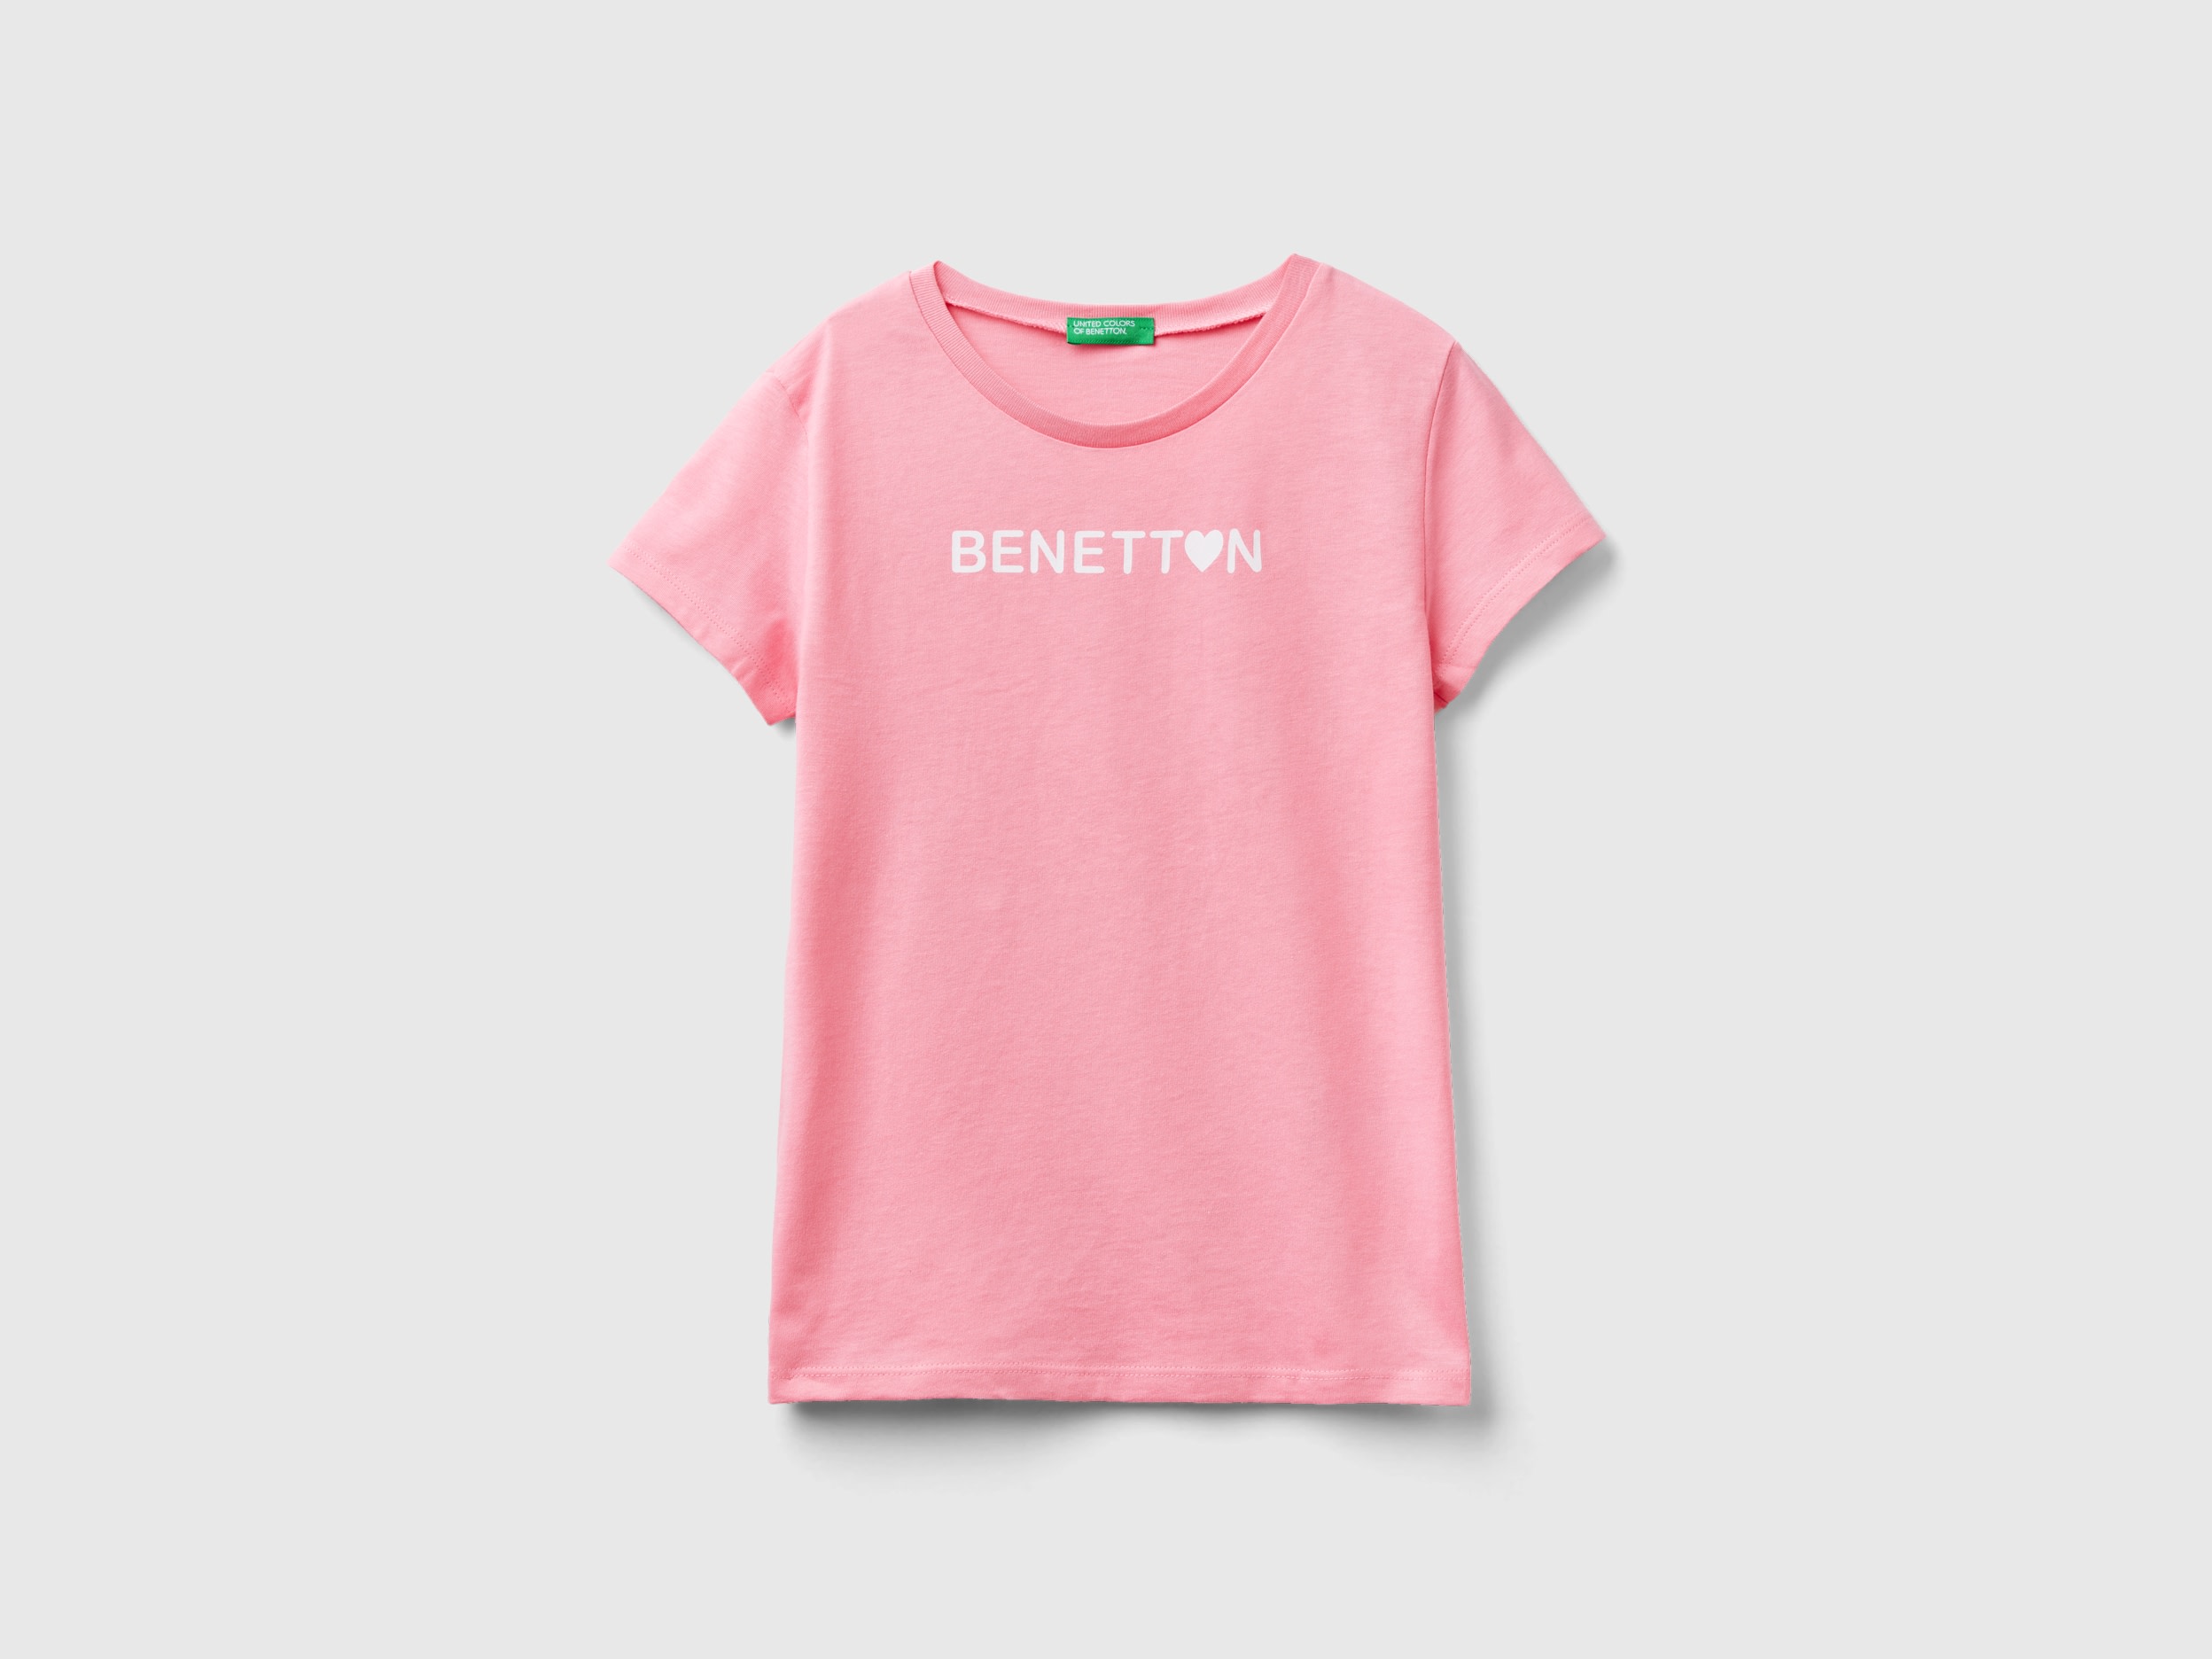 Benetton, 100% Cotton T-shirt With Logo, size 3XL, Pink, Kids